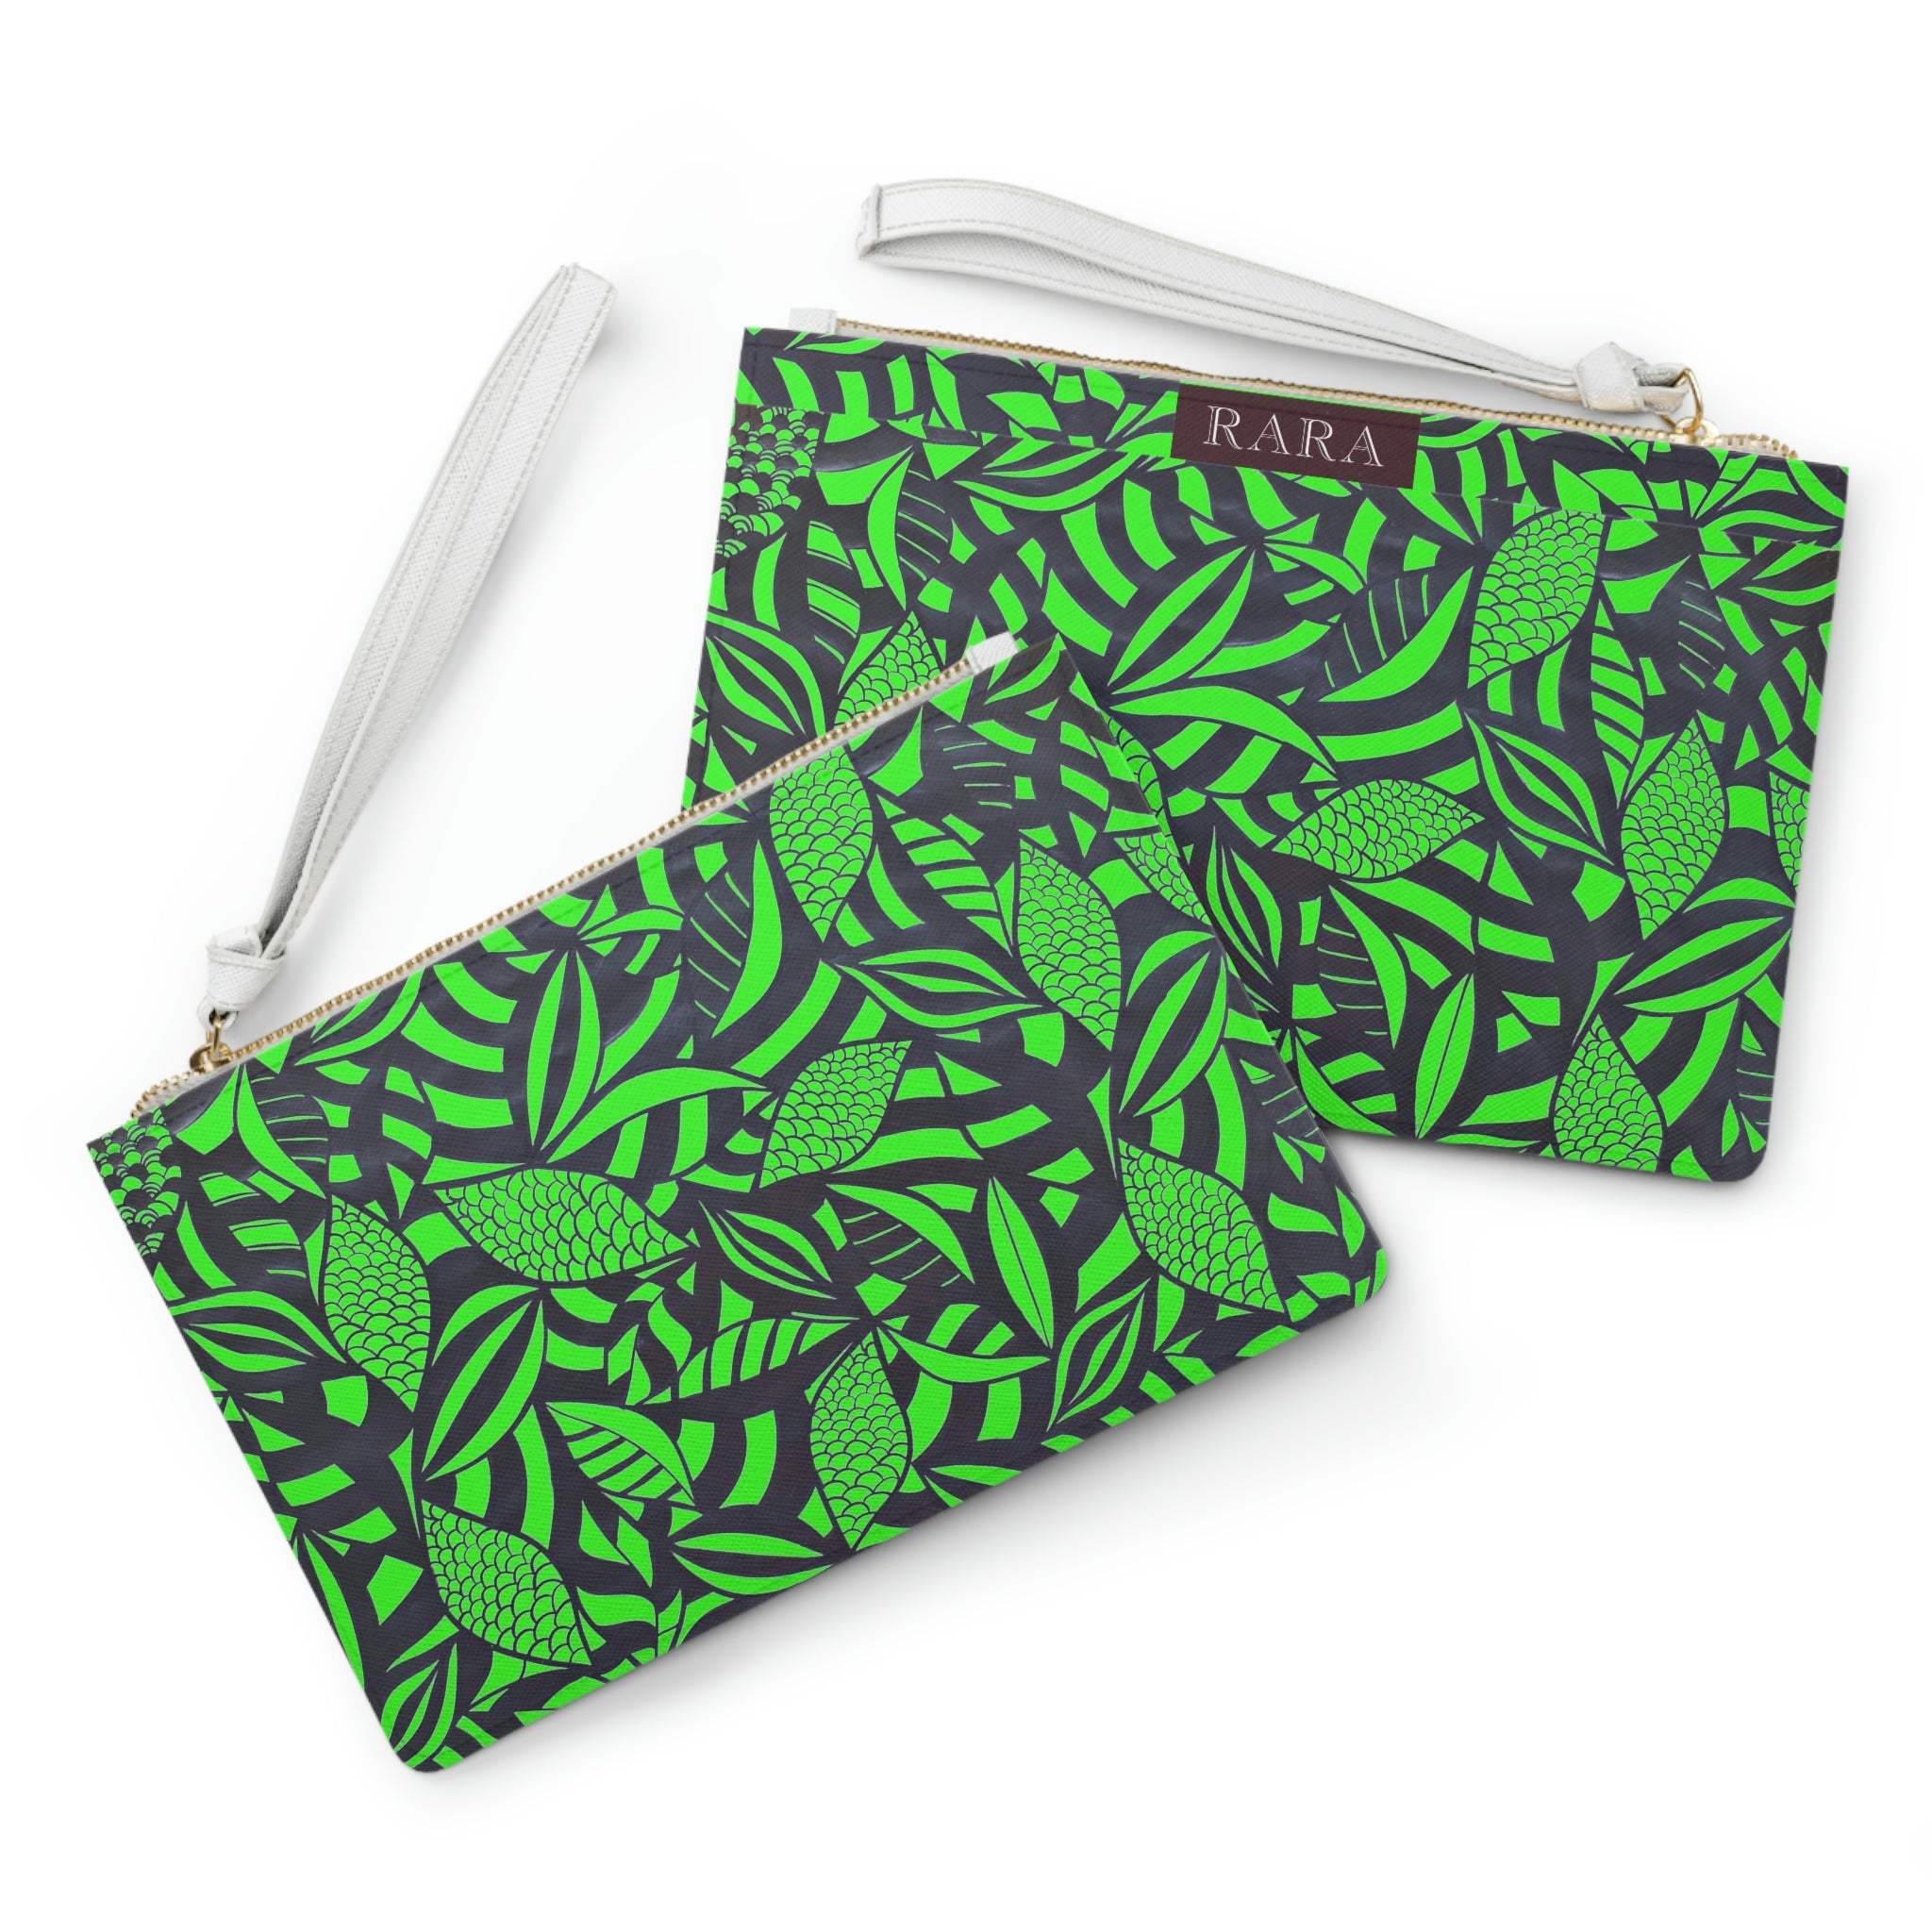 neon green monochrome tropical leaves print clutch bag